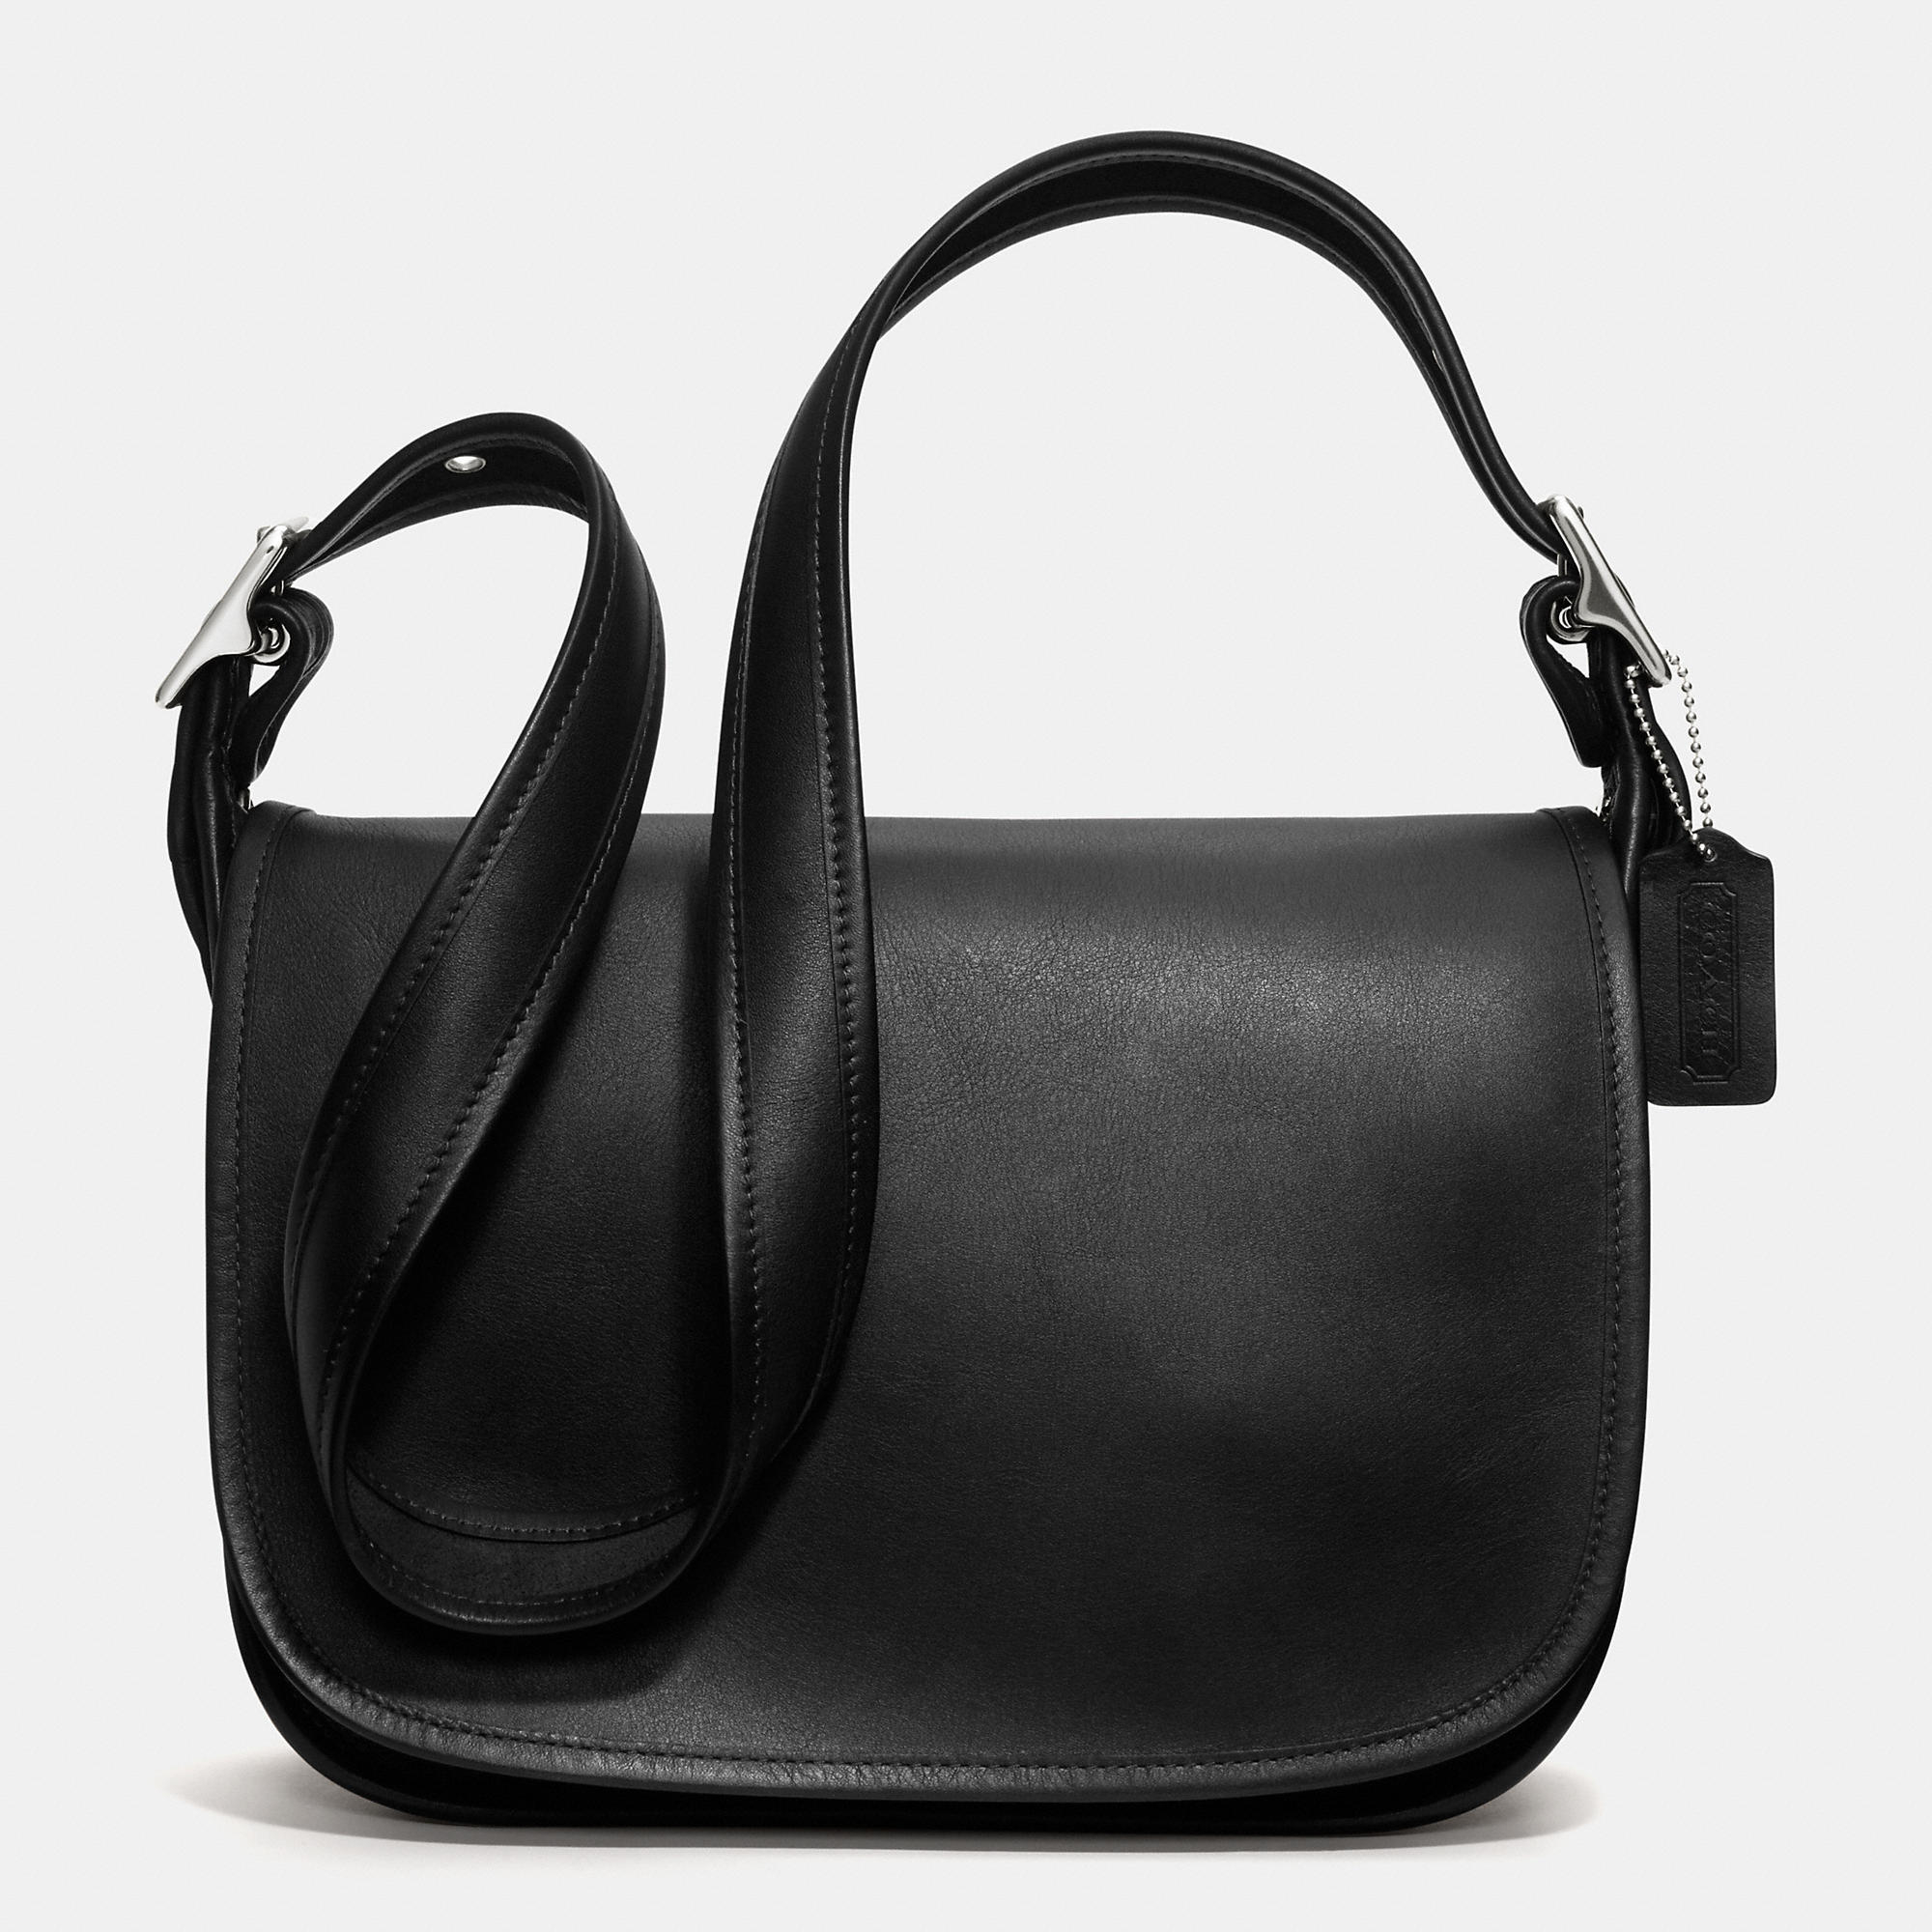 COACH Classic Patricias Legacy Bag in Black - Lyst